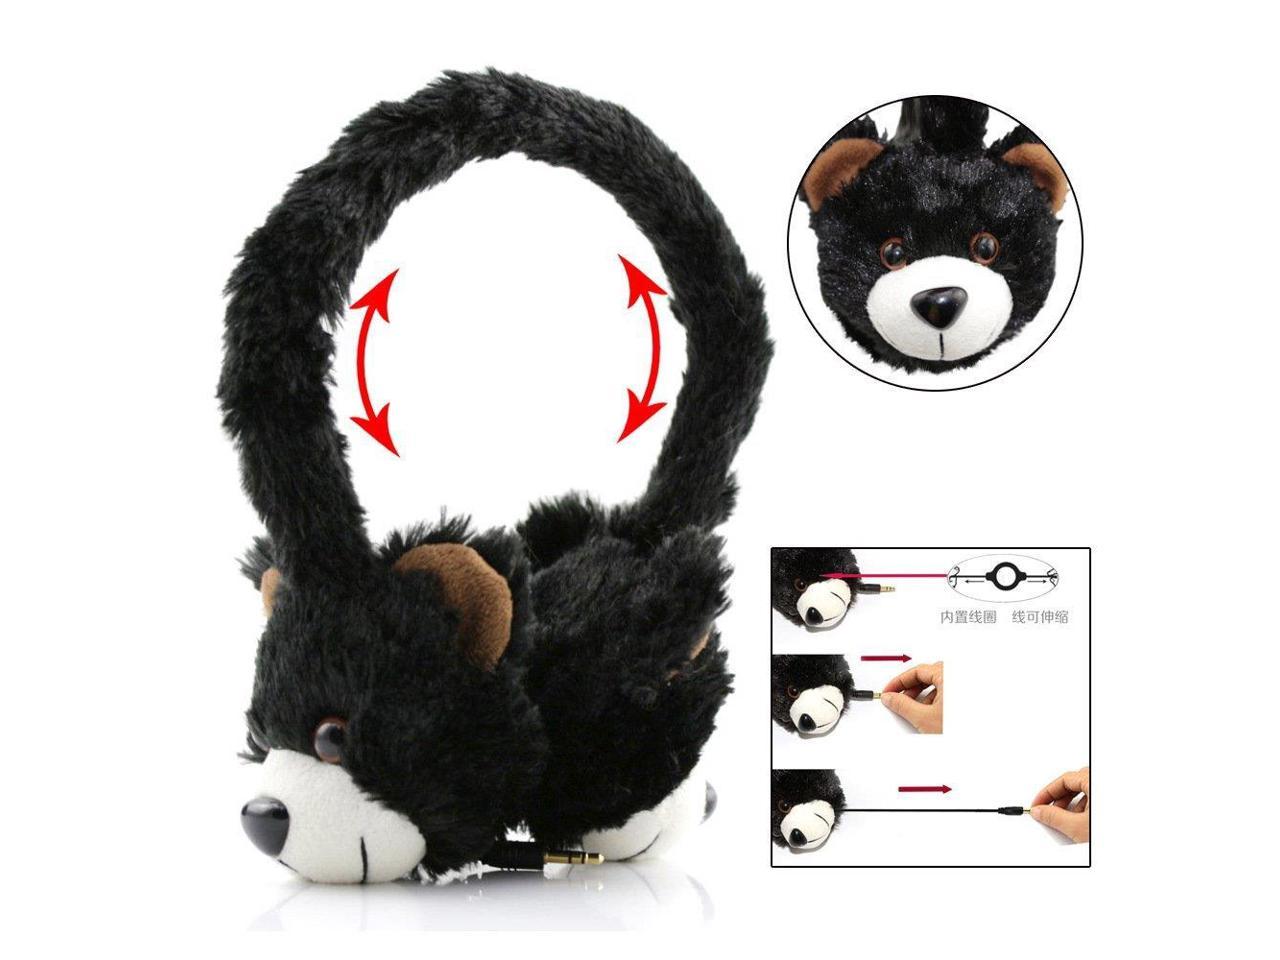 Dairle P02 Bear Cute Animal Kids Music Headphones with Adjustable Headband for Smartphone, Mp4, PC, Laptop (No Microphone) -Black